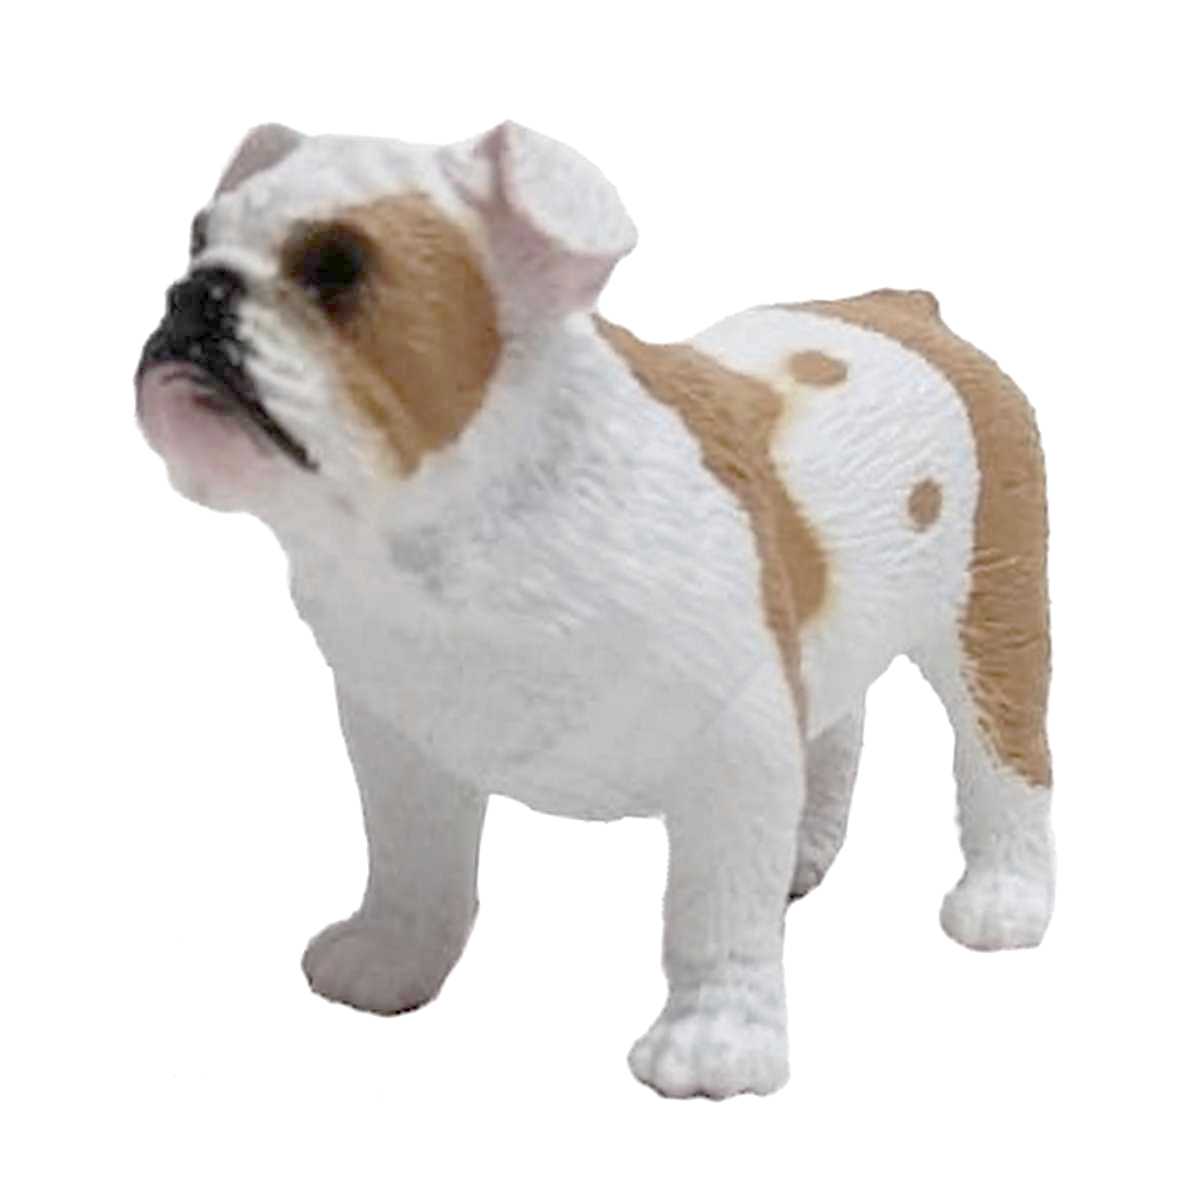 Miniatura do cachorro Buldogue Bulldog Best in Show dogs marca Safari Ltd 162229